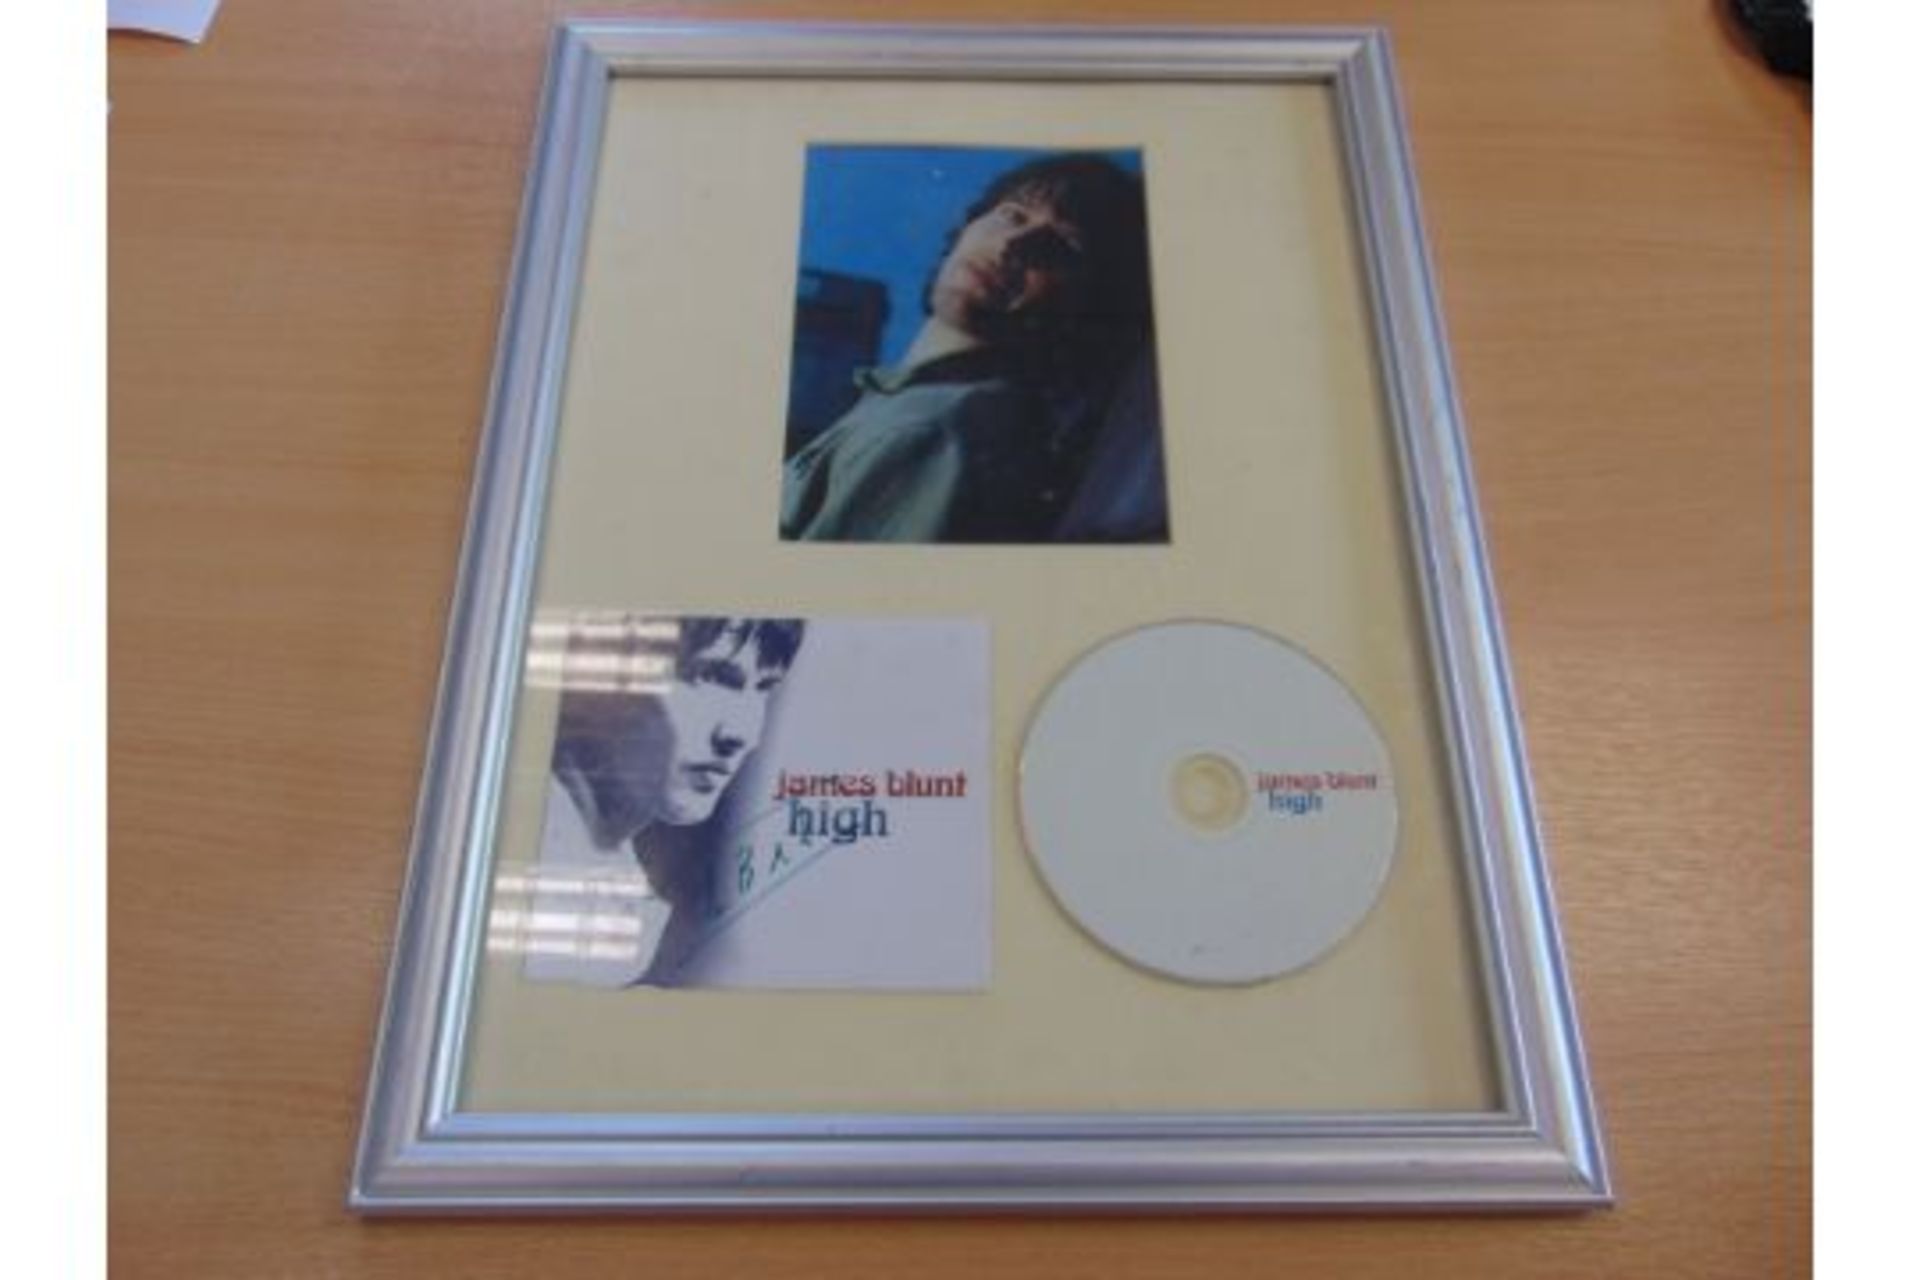 Framed Photo James Blunt with signed CD